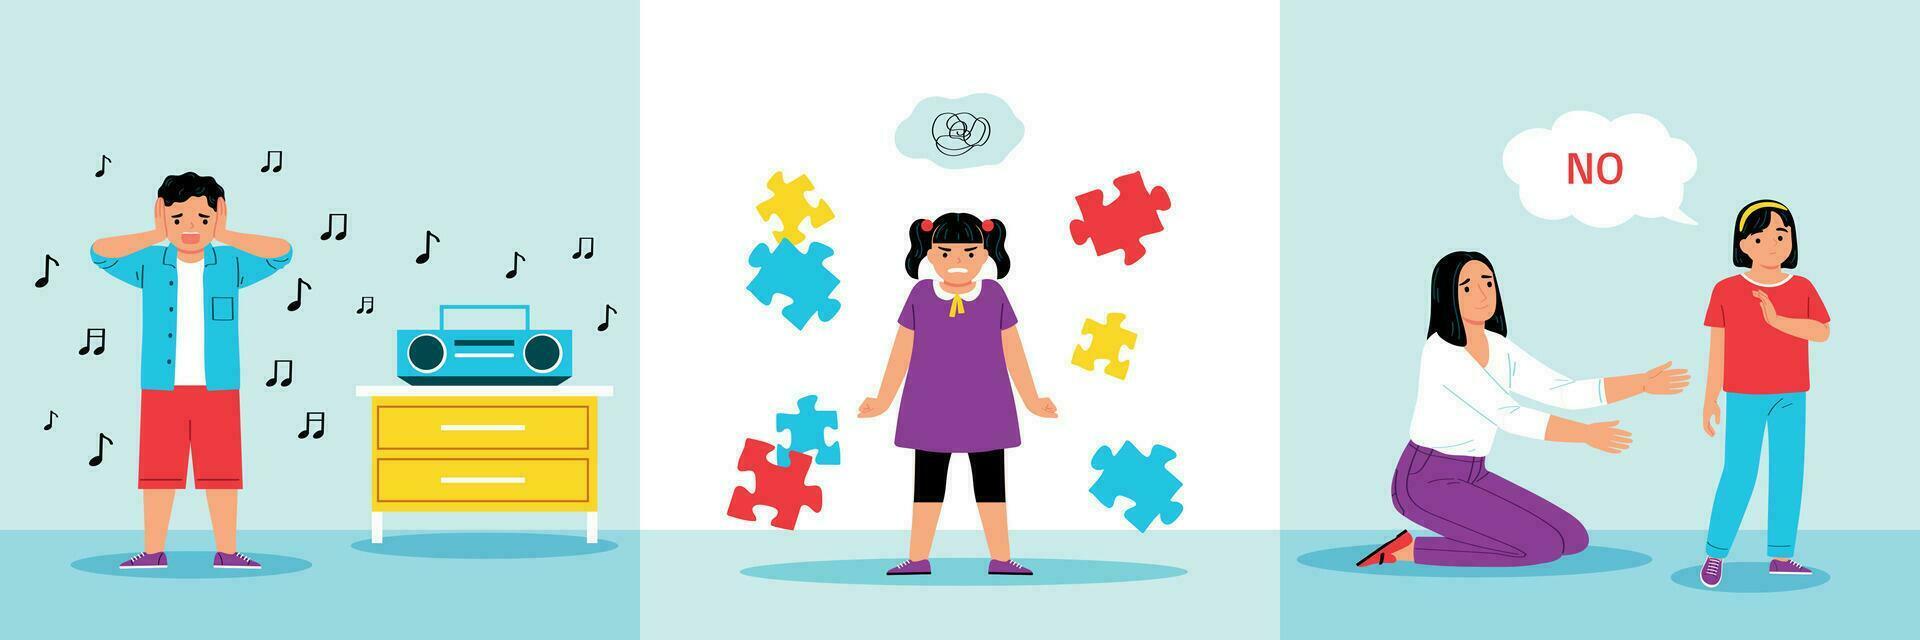 Child Autism Square Compositions vector